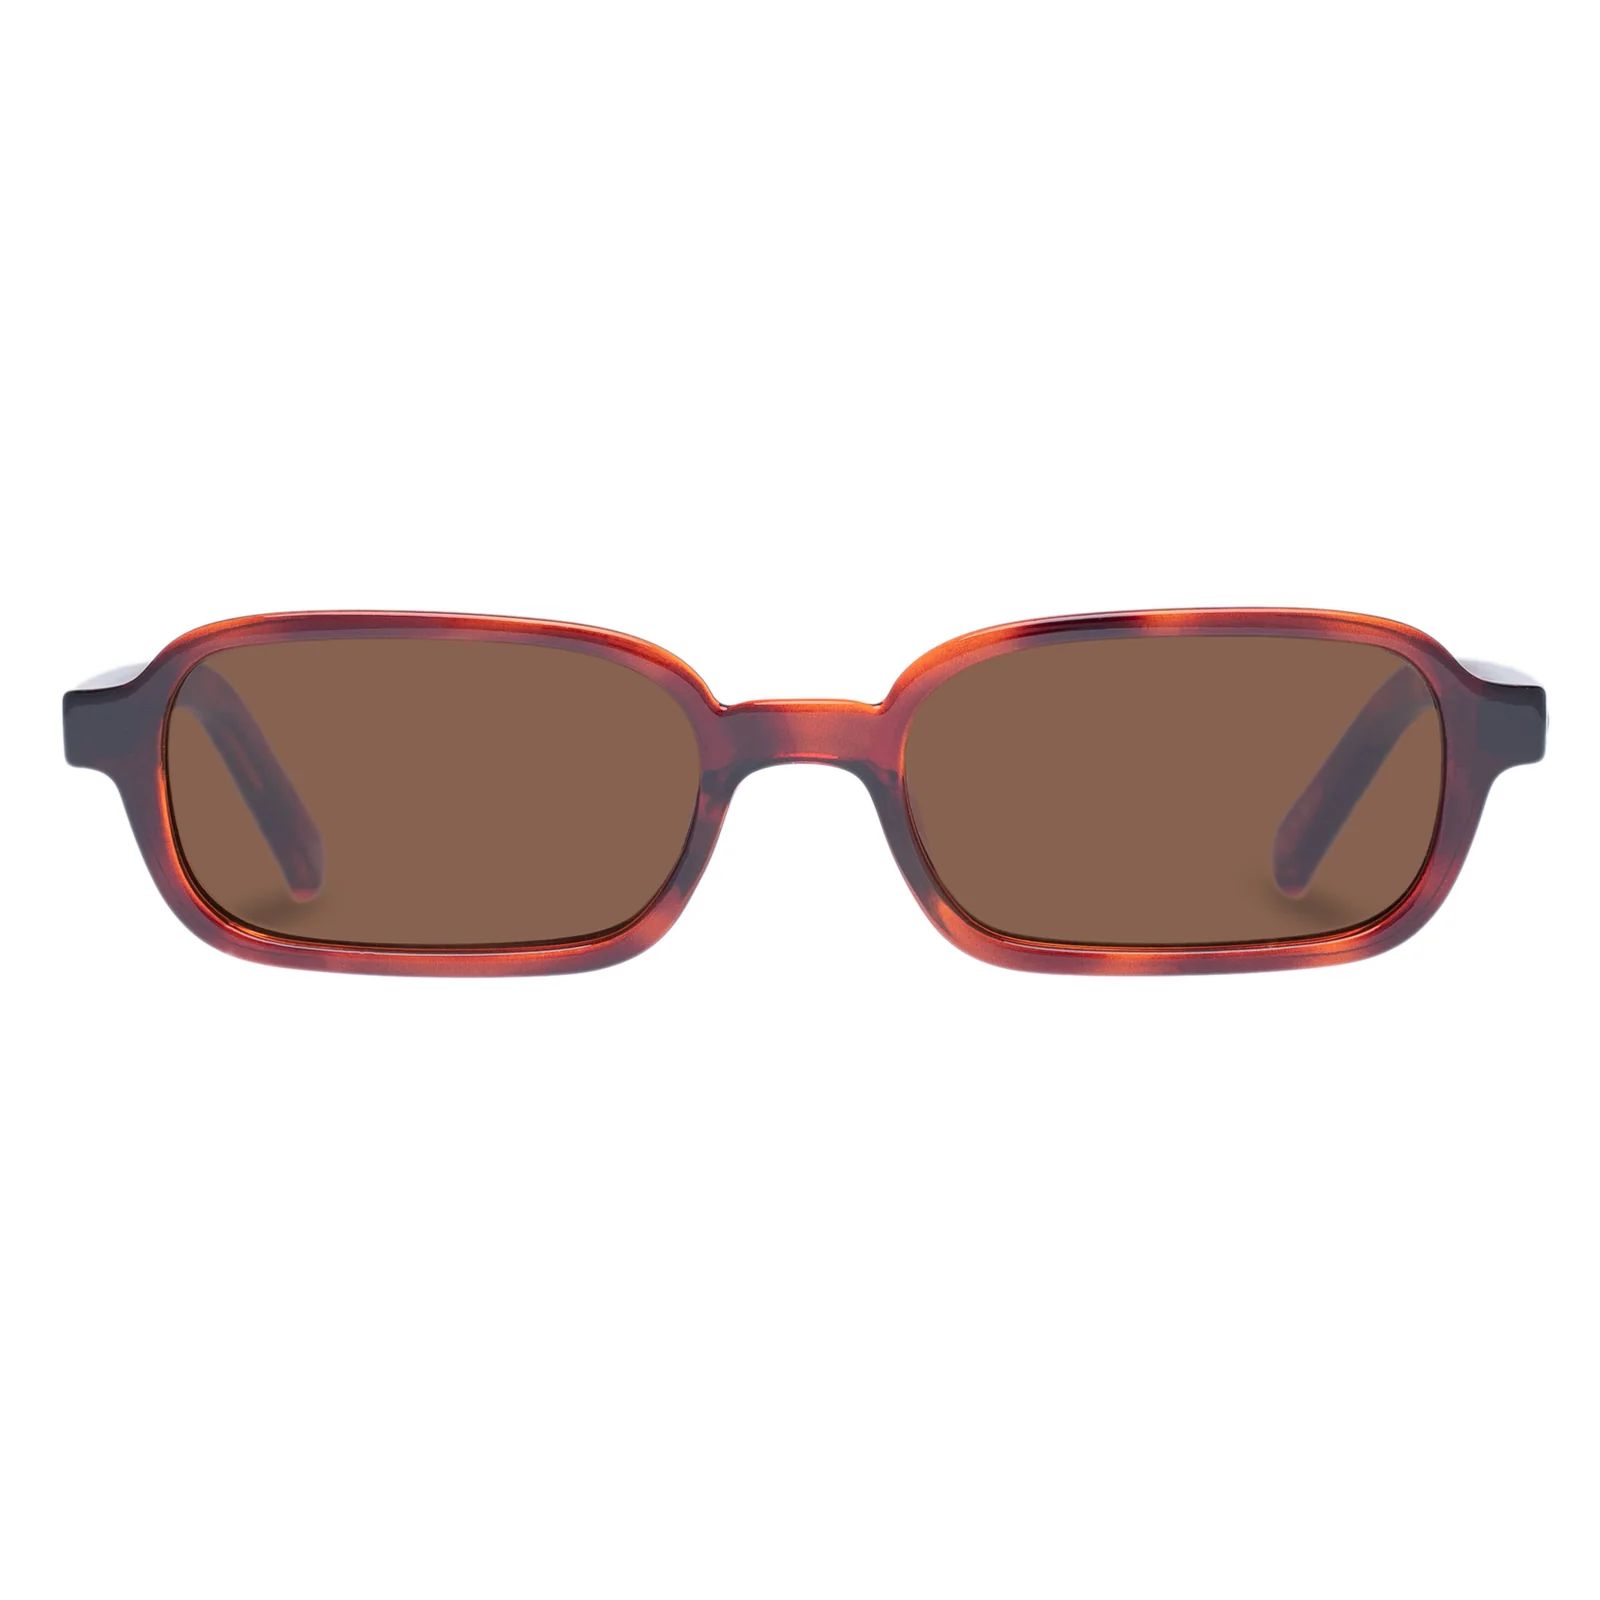 PILFERER | TOFFEE TORT | Le Specs (Sunglasses)